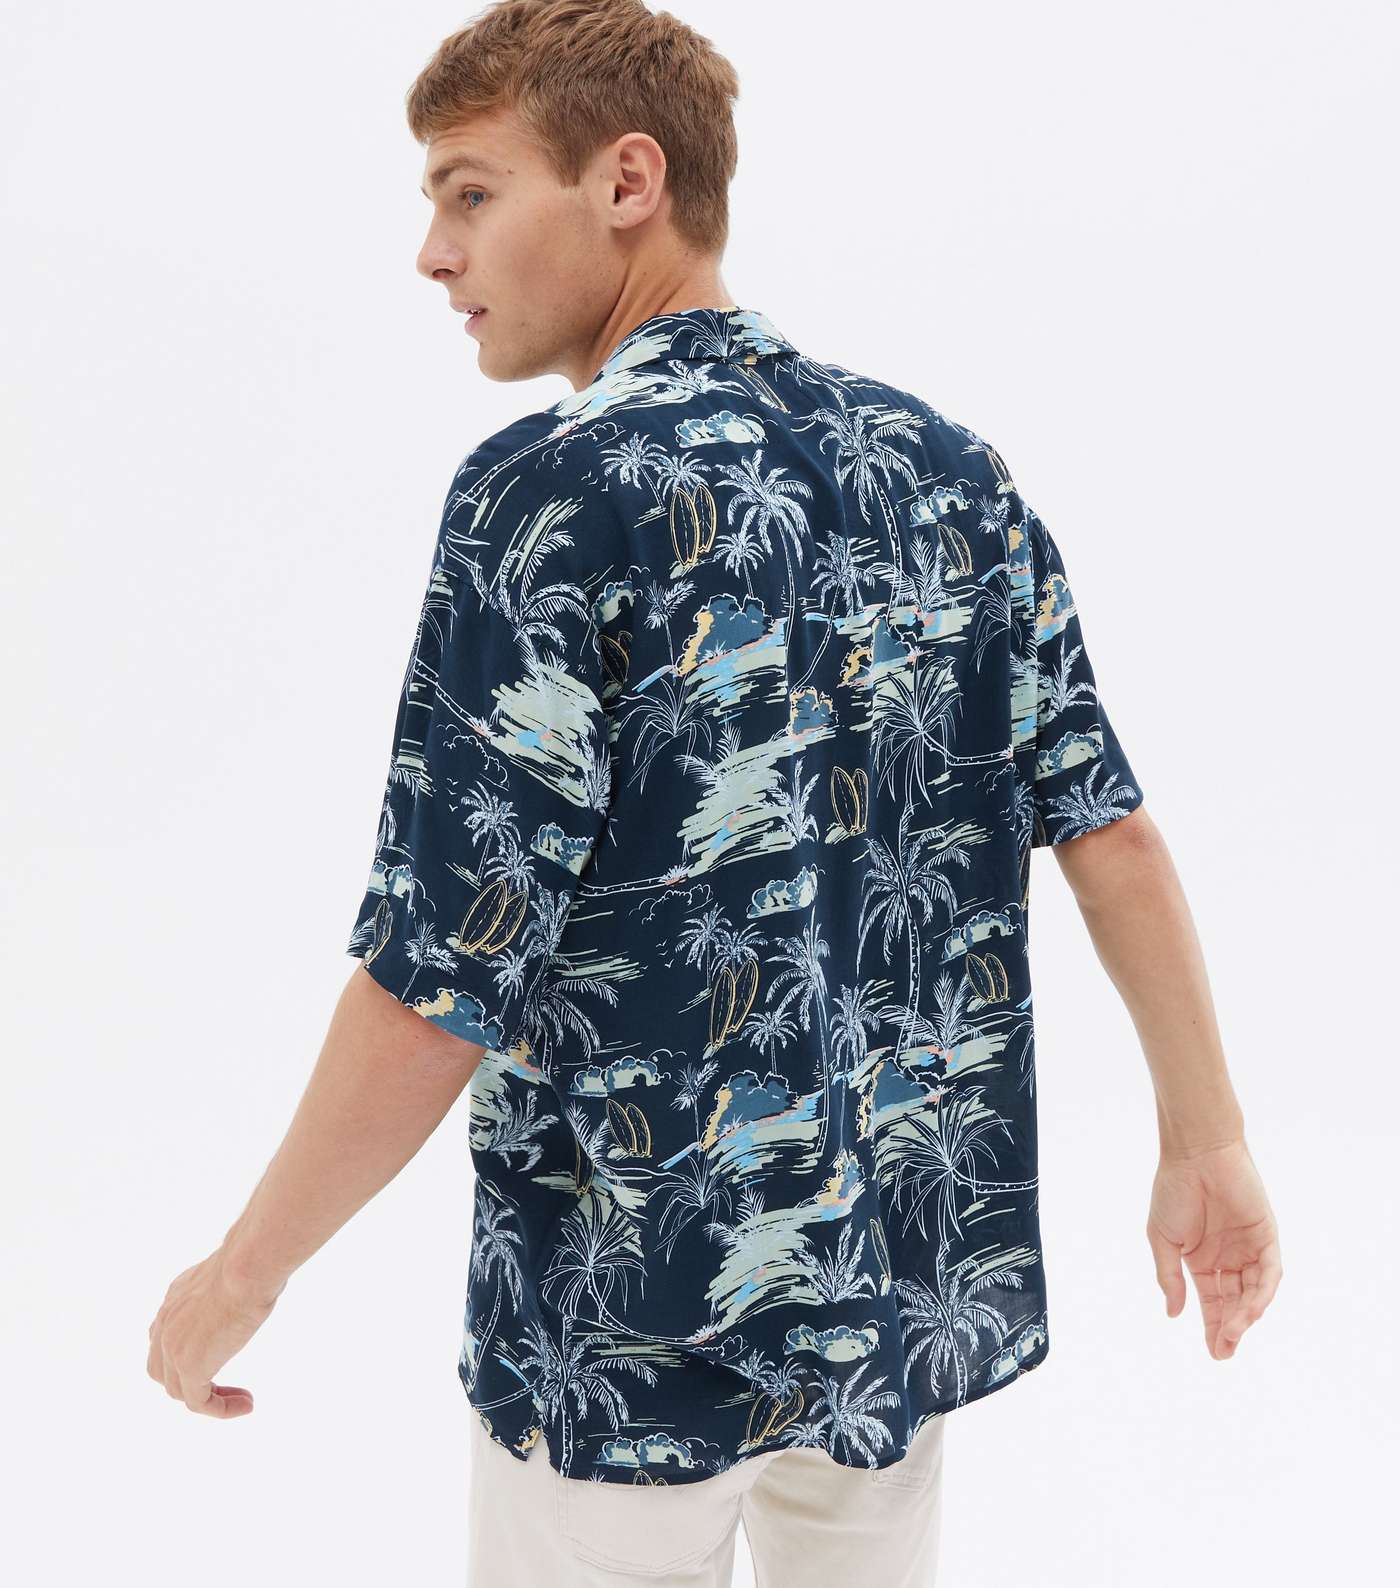 Jack & Jones Navy Palm Short Sleeve Shirt Image 4